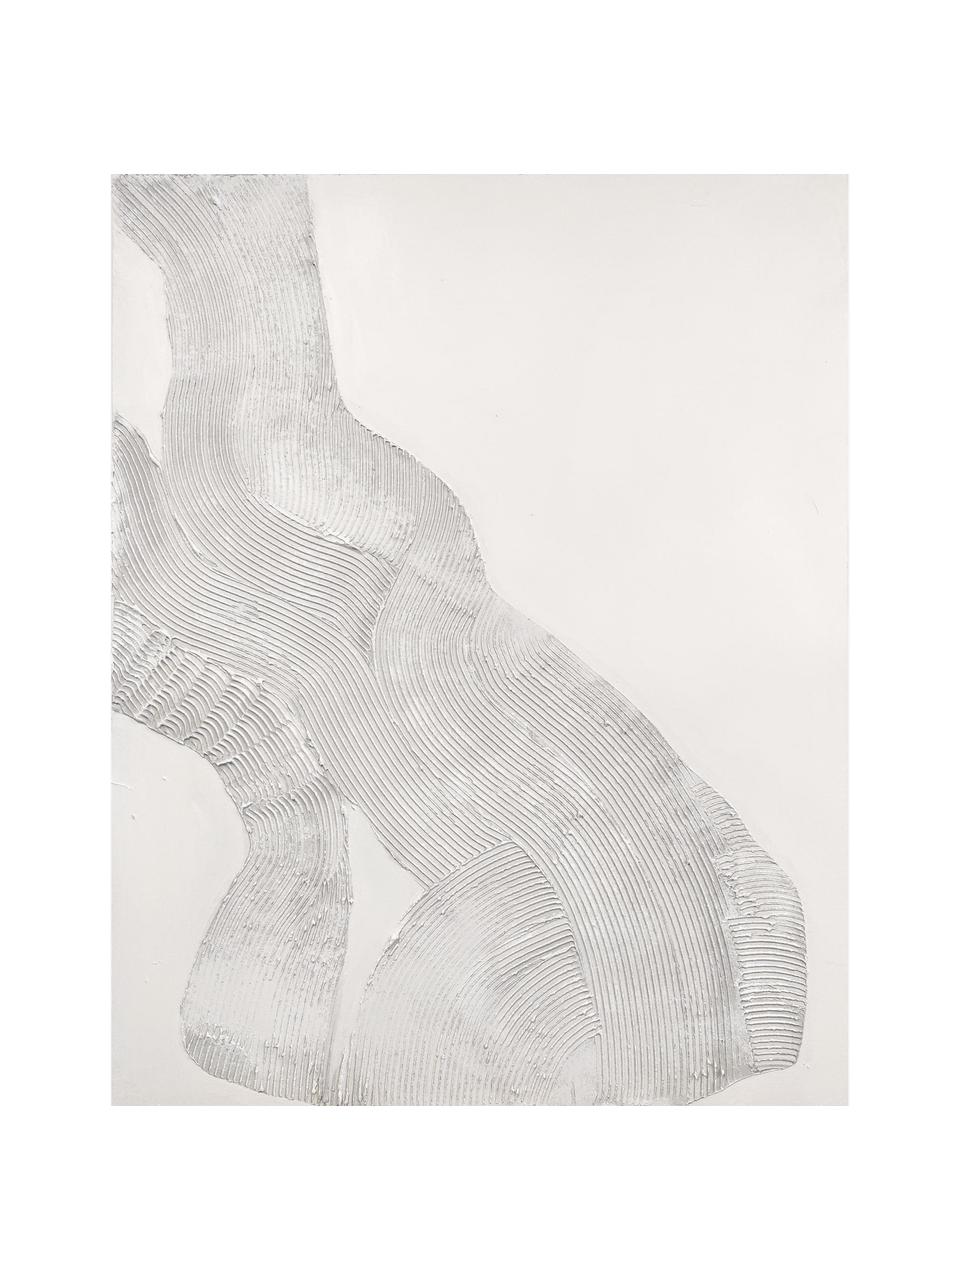 Handbeschilderde canvasdoek White Sculpture 1, Wit, B 88 x H 118 cm